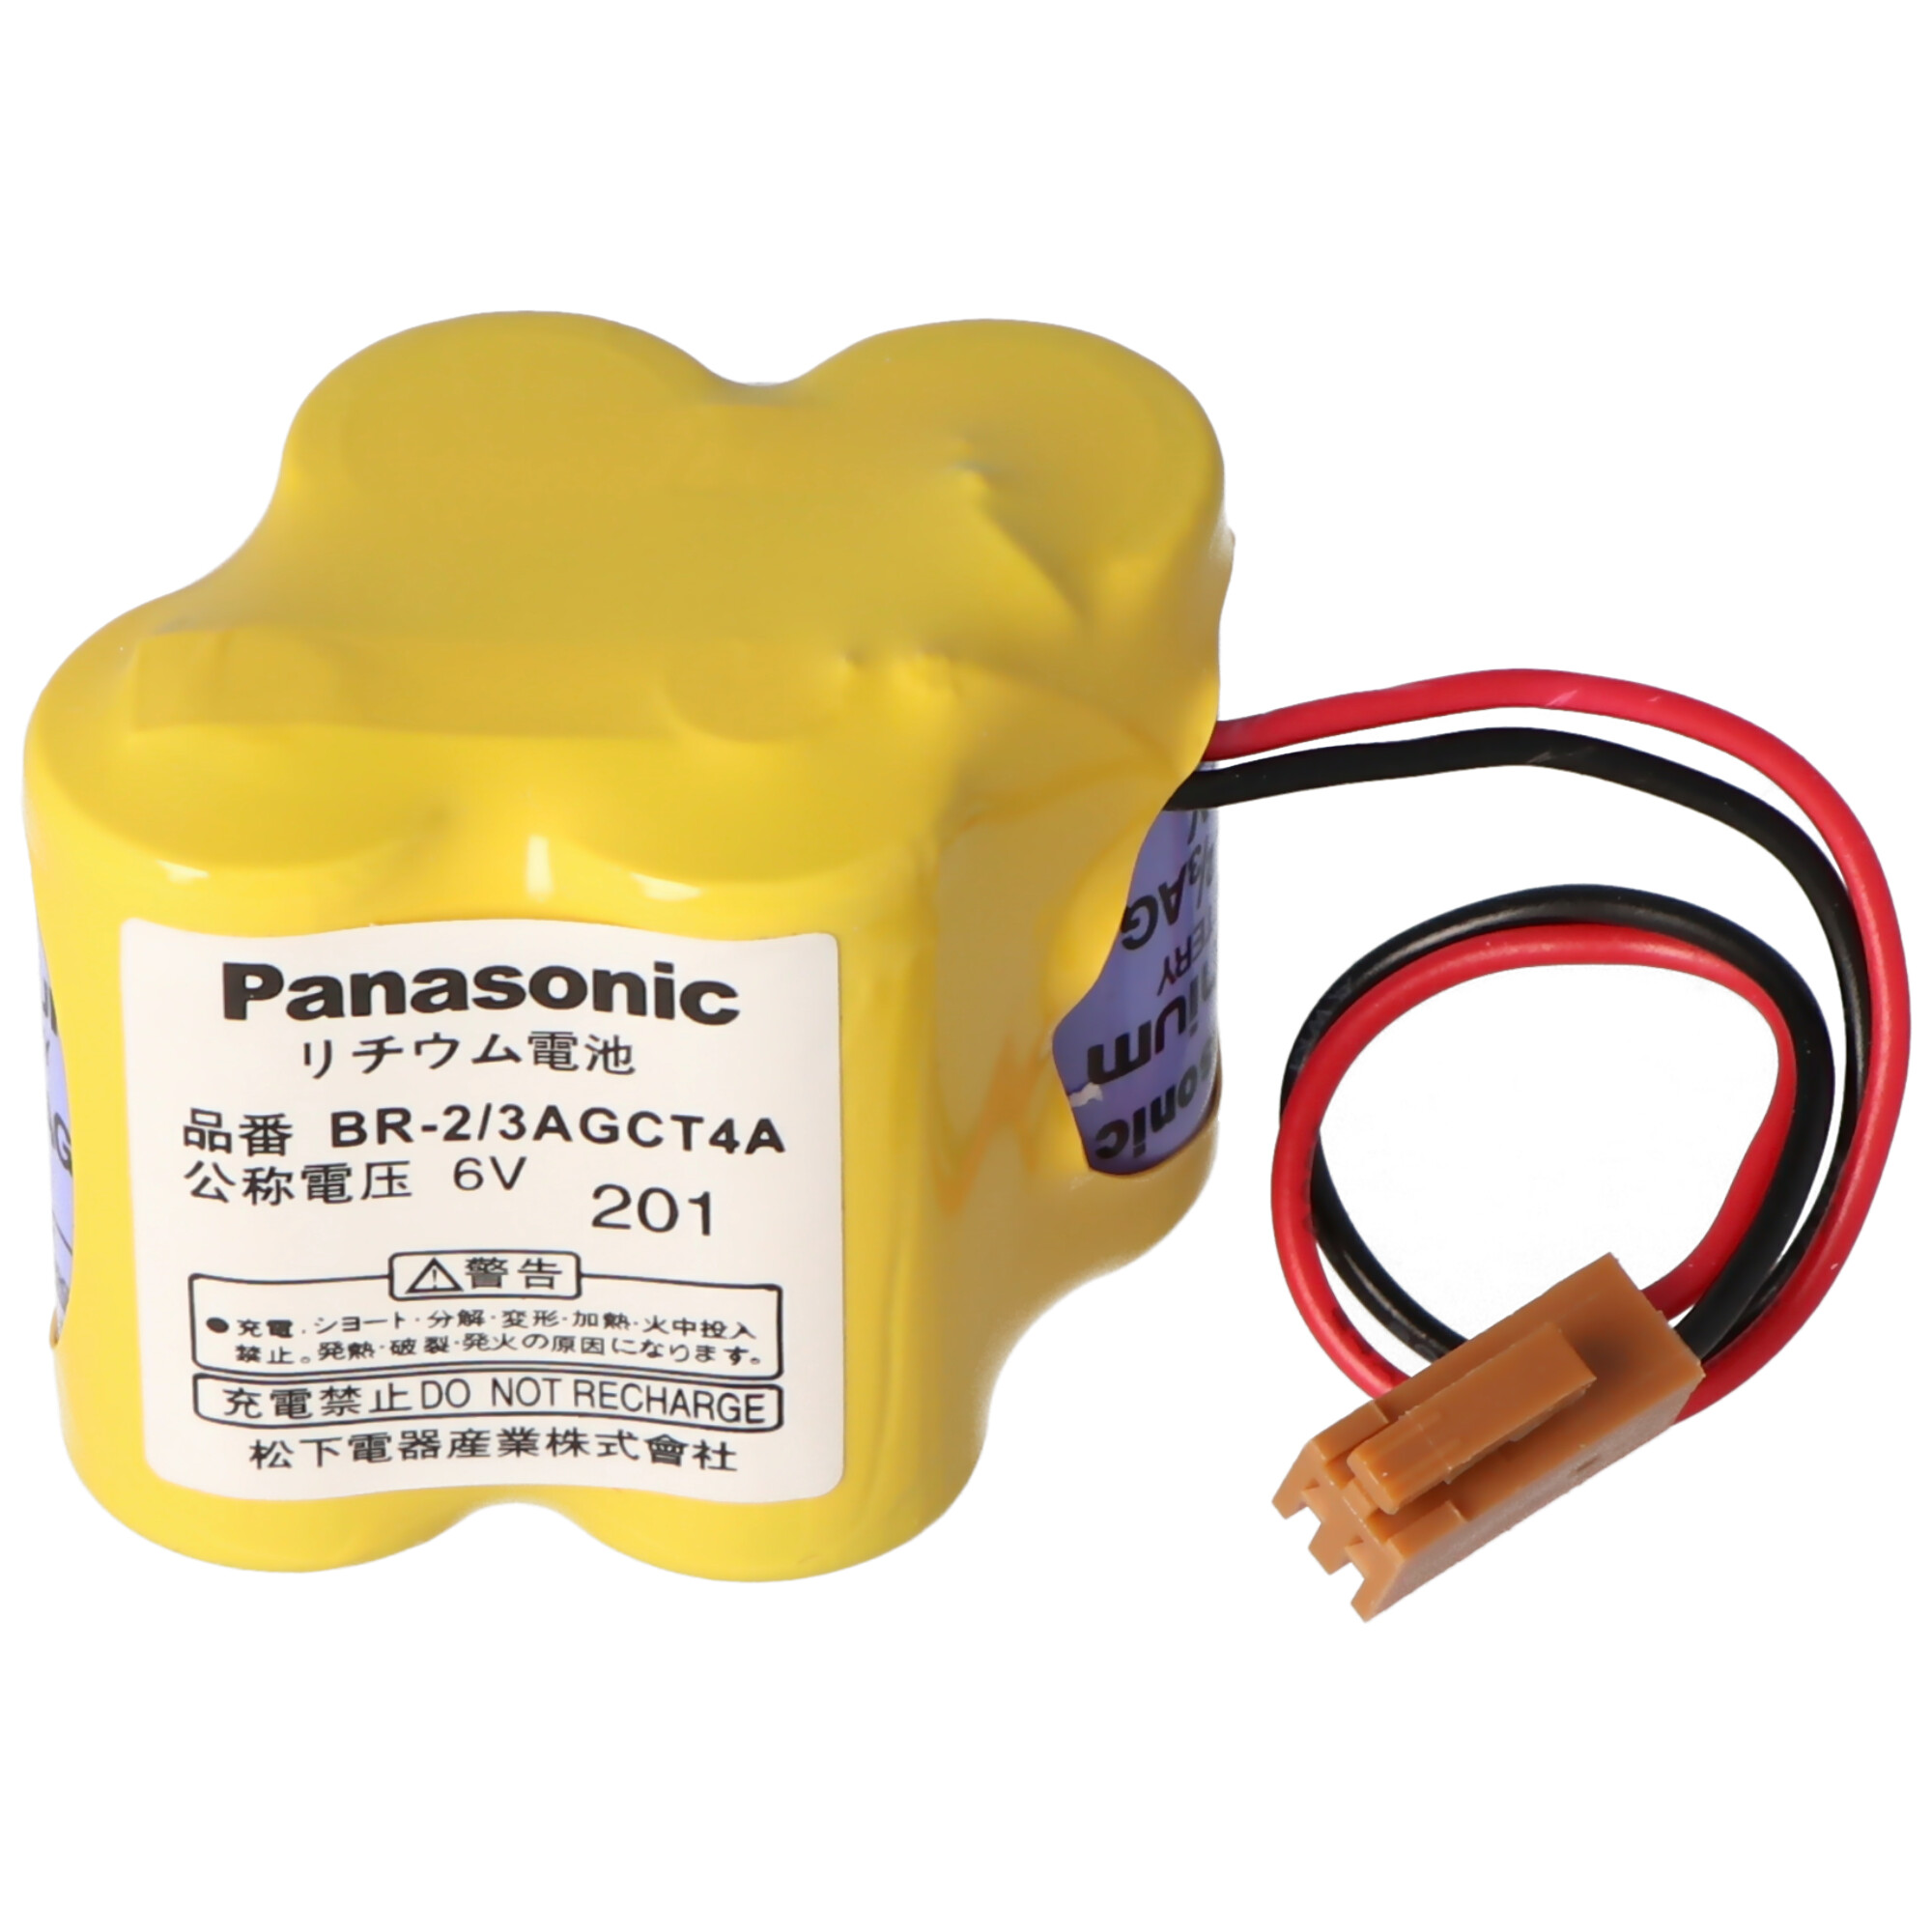 Panasonic Original Lithium Batterie max. 2900mAh CNC BR-2/3AGCT4A, Fanuc A98L-0031-0025, BR-2/3AG, mit Panasonic Zellen in Erstausrüsterqualität, kein billiger Nachbau